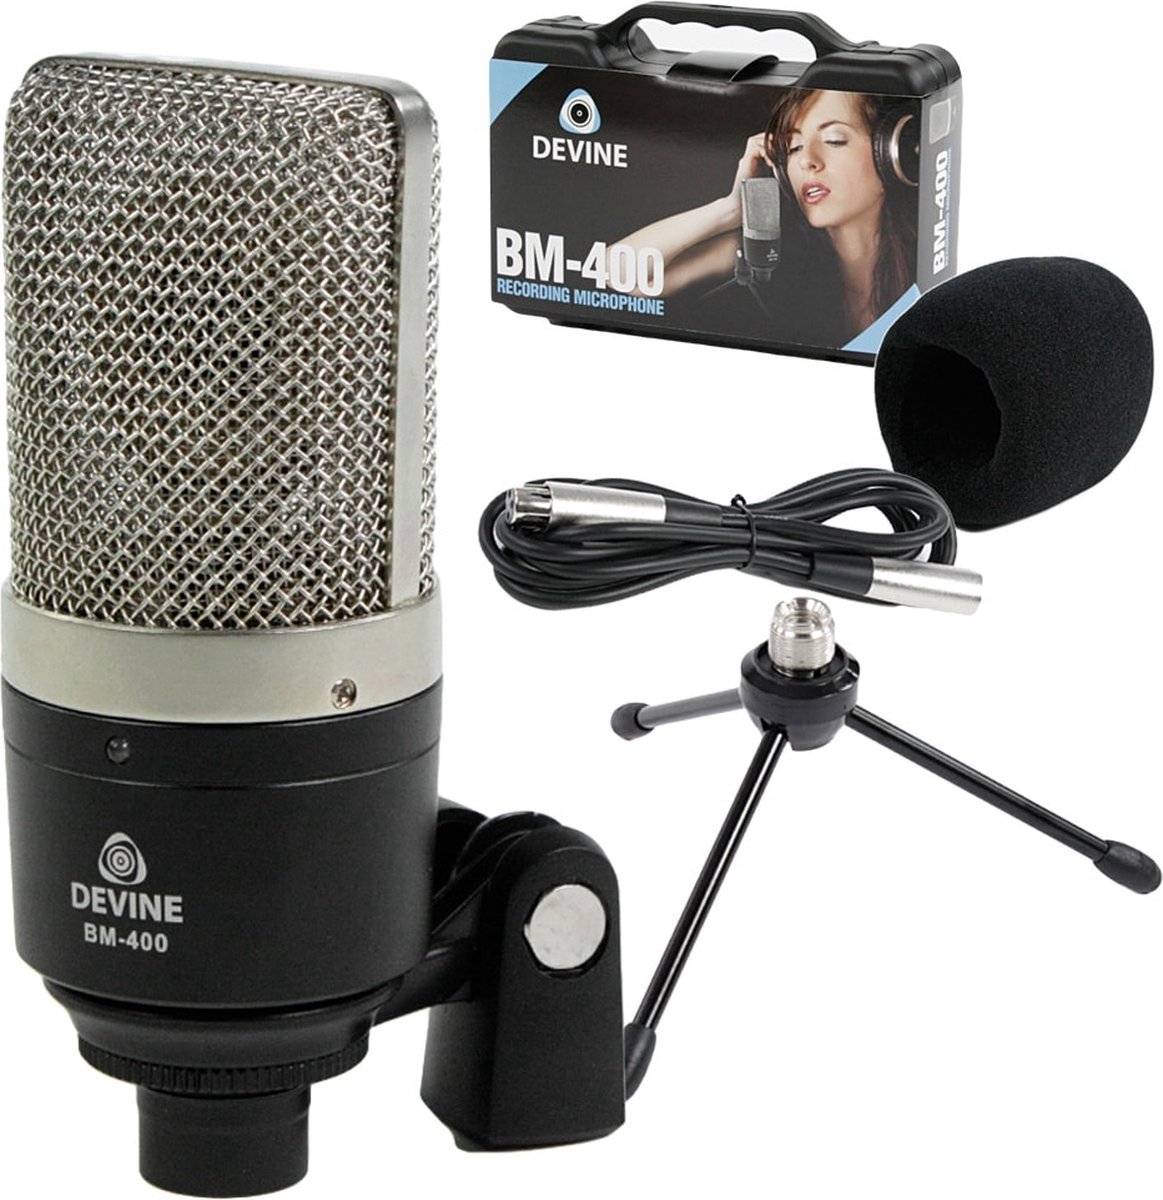 Devine BM-400 Condensator Studio Microfoon set - Plopkap Popfilter - Standaard - XLR kabel - Gaming - Streaming - Studiomicrofoon - Zwart